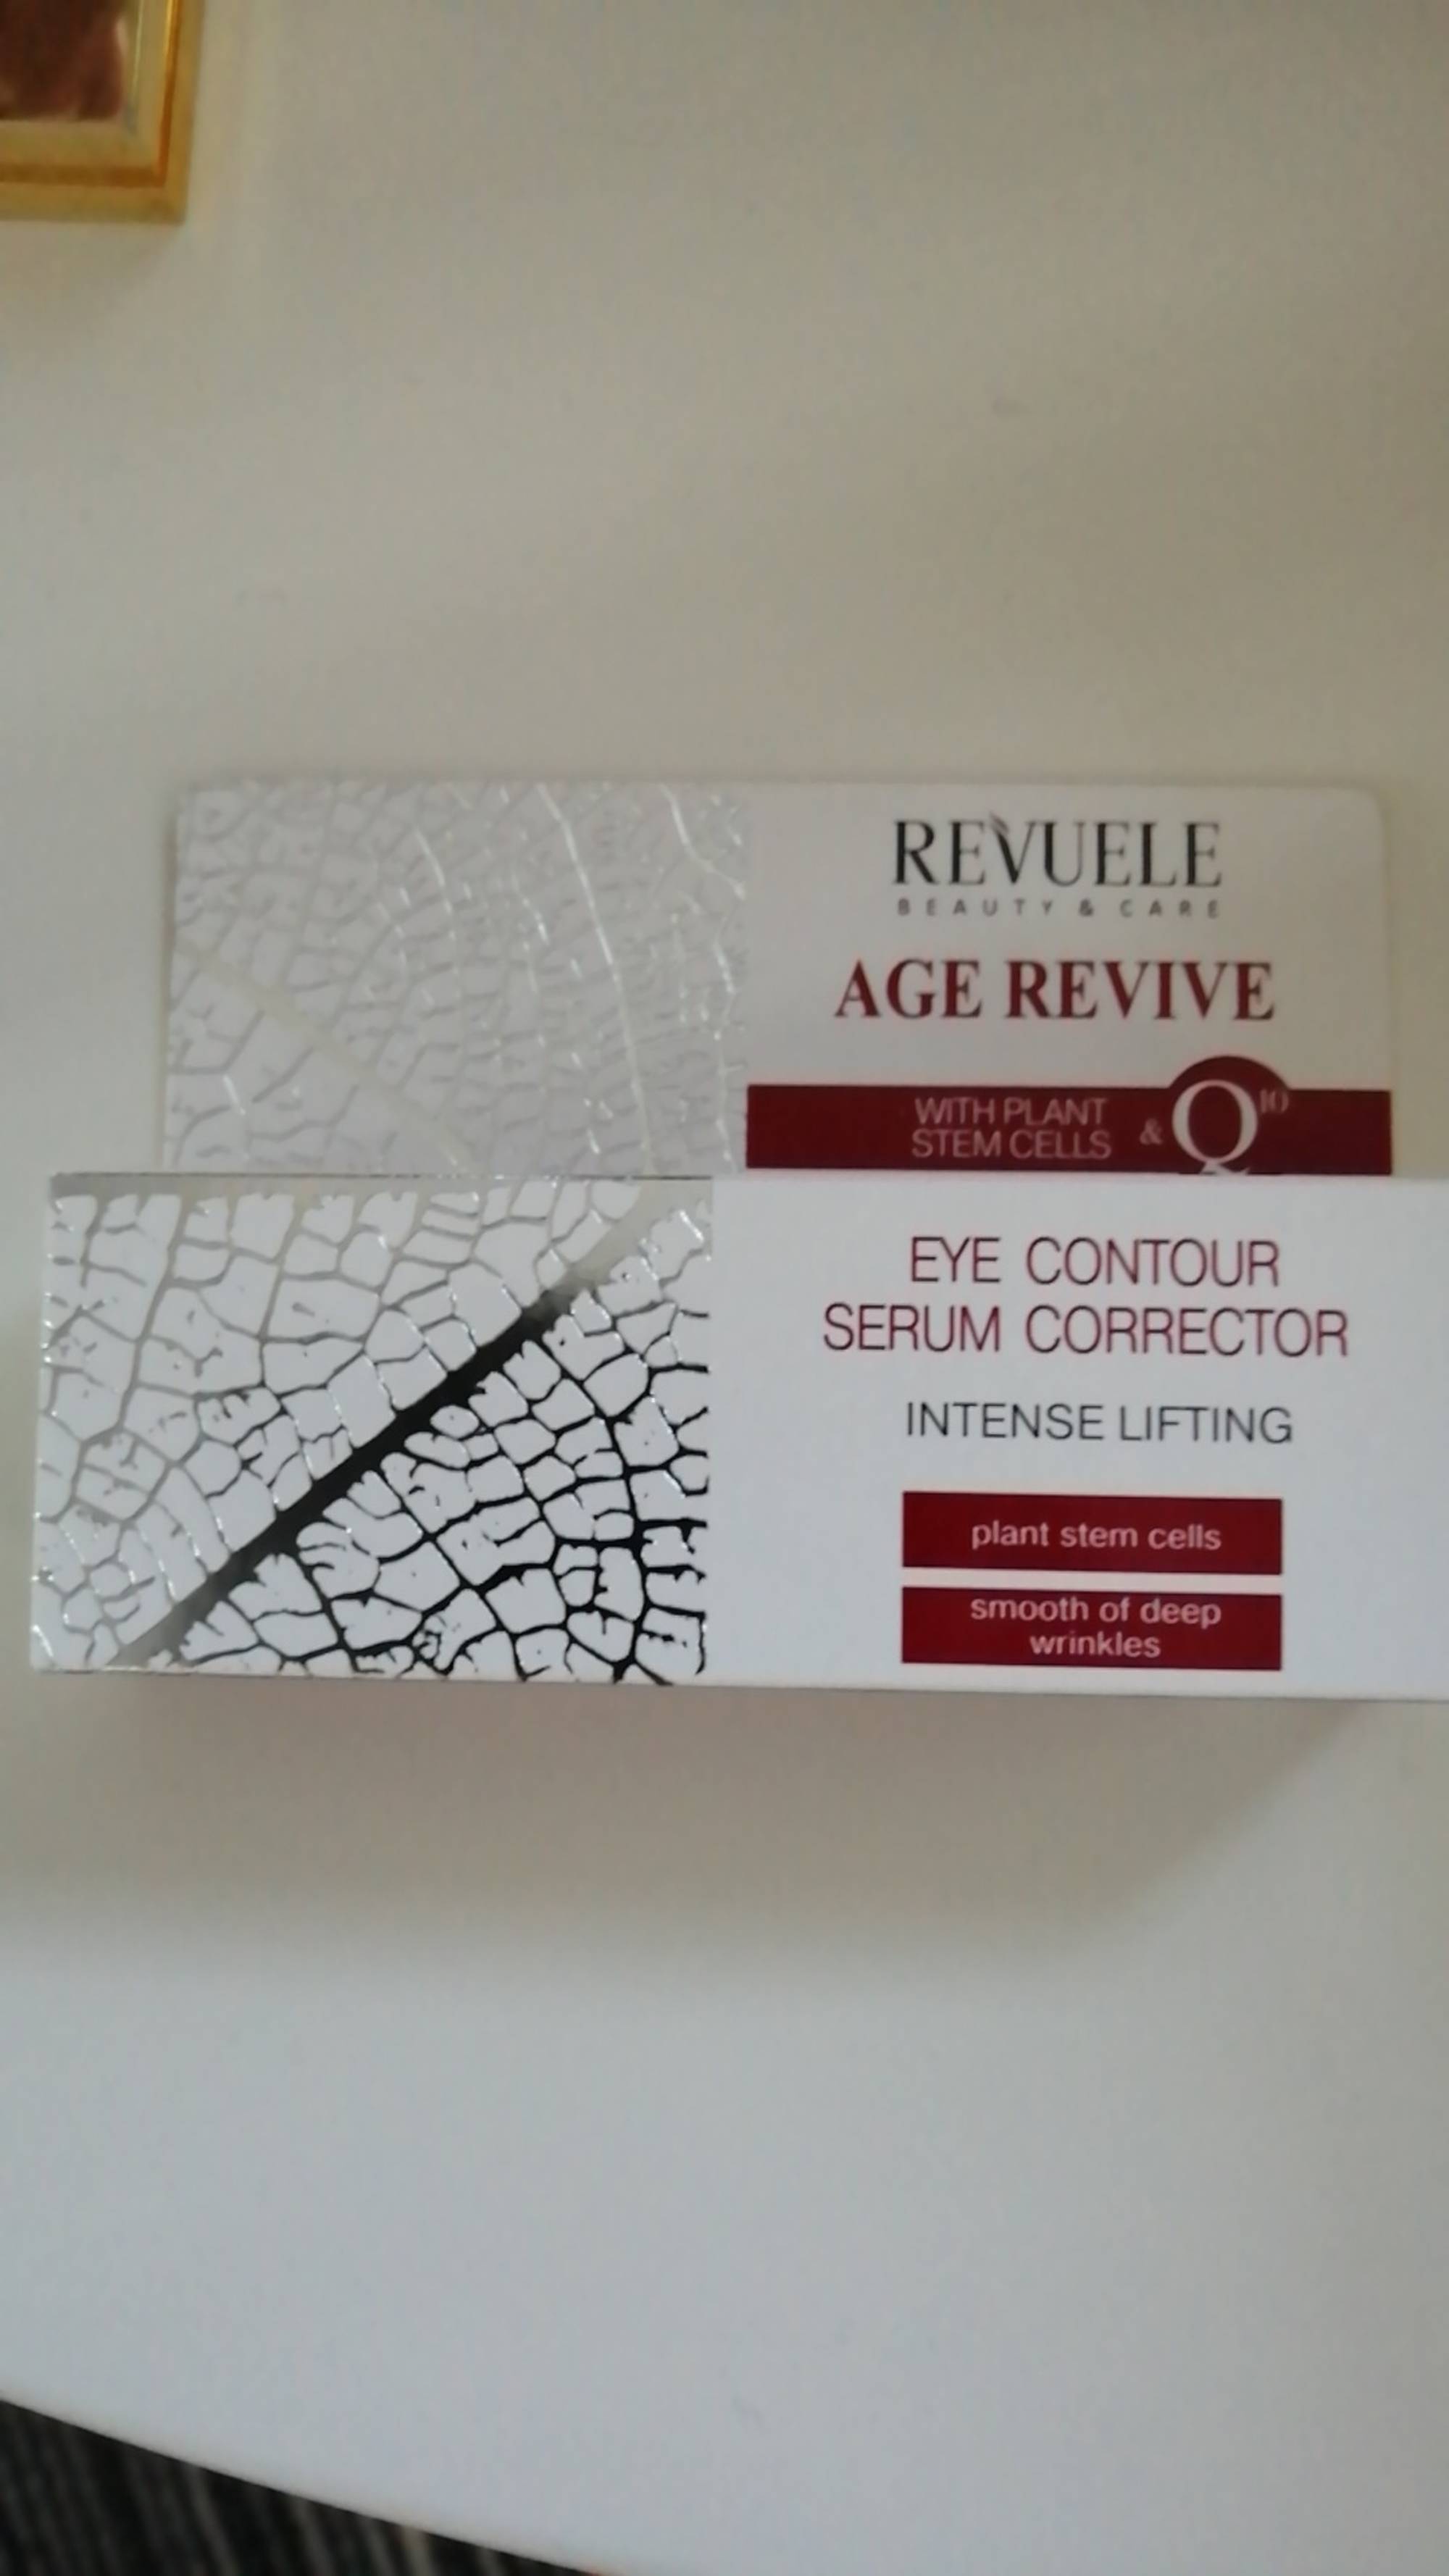 REVUELE - Age revive - Eye contour serum corrector